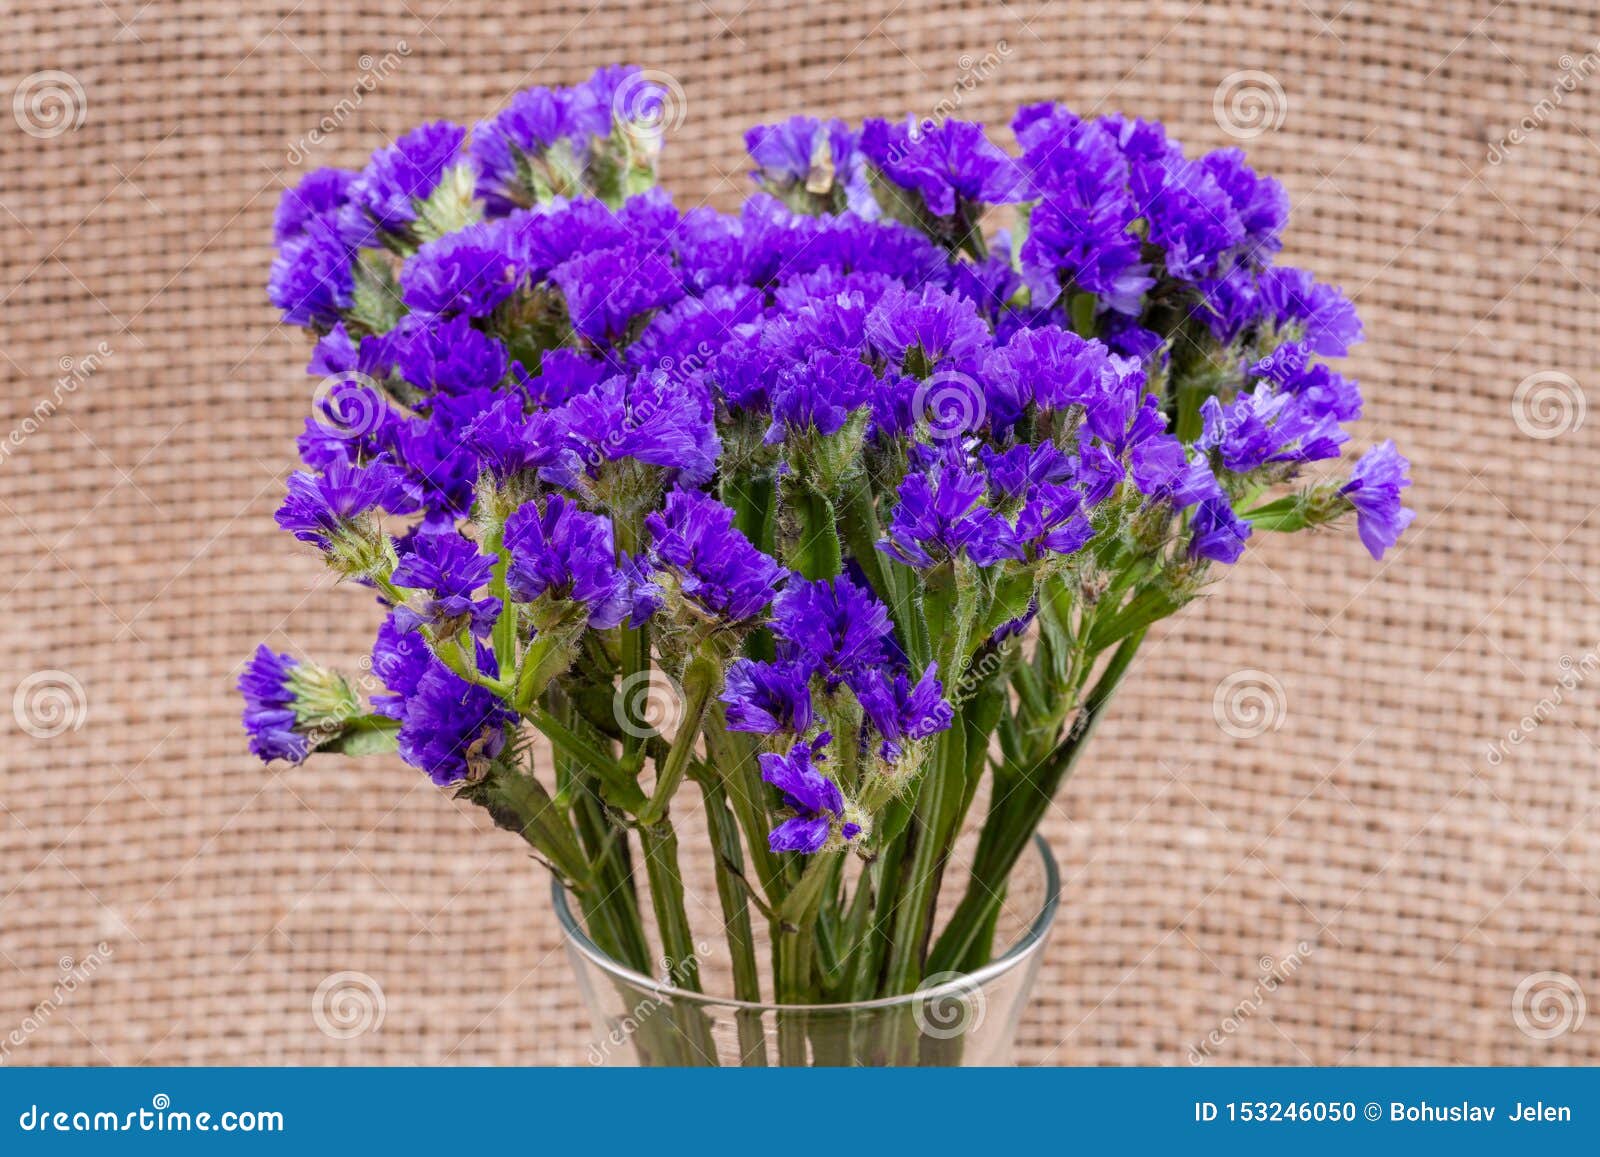 Dark Purple Statice Limonium Sinuatum Flowers In Clear Glass Vase On ...